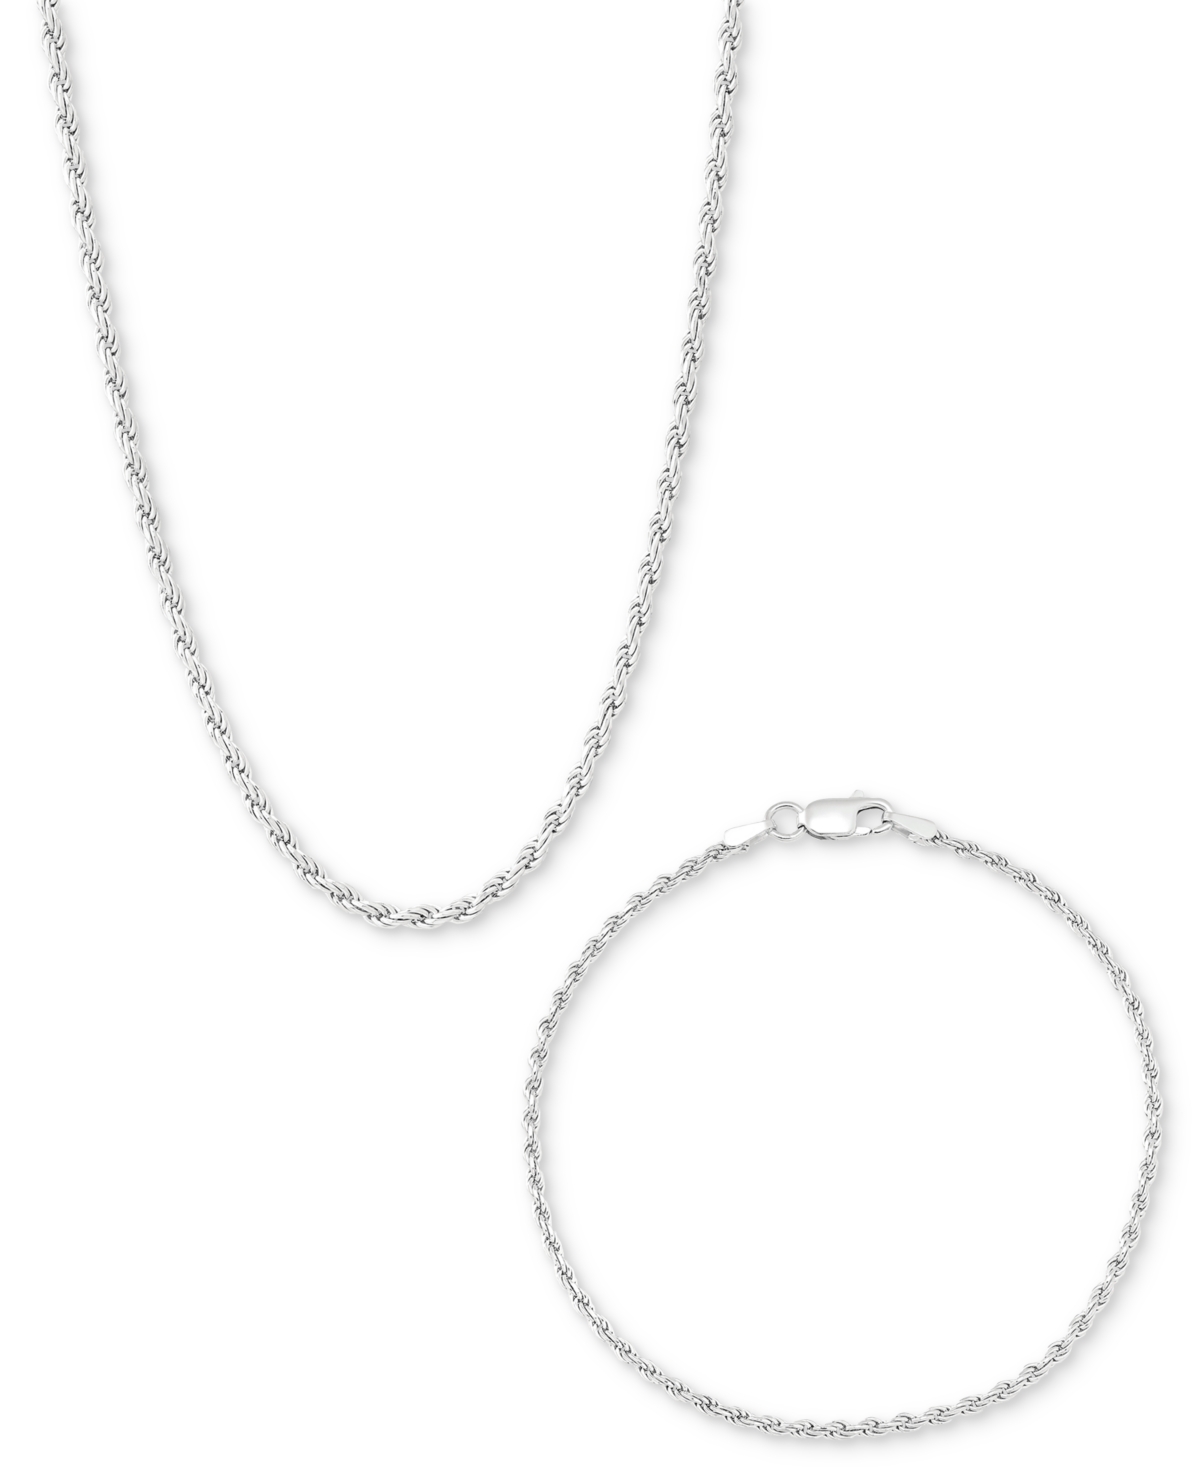 2-Pc. Set Polished Rope Link Collar Necklace & Matching Bracelet - Silver